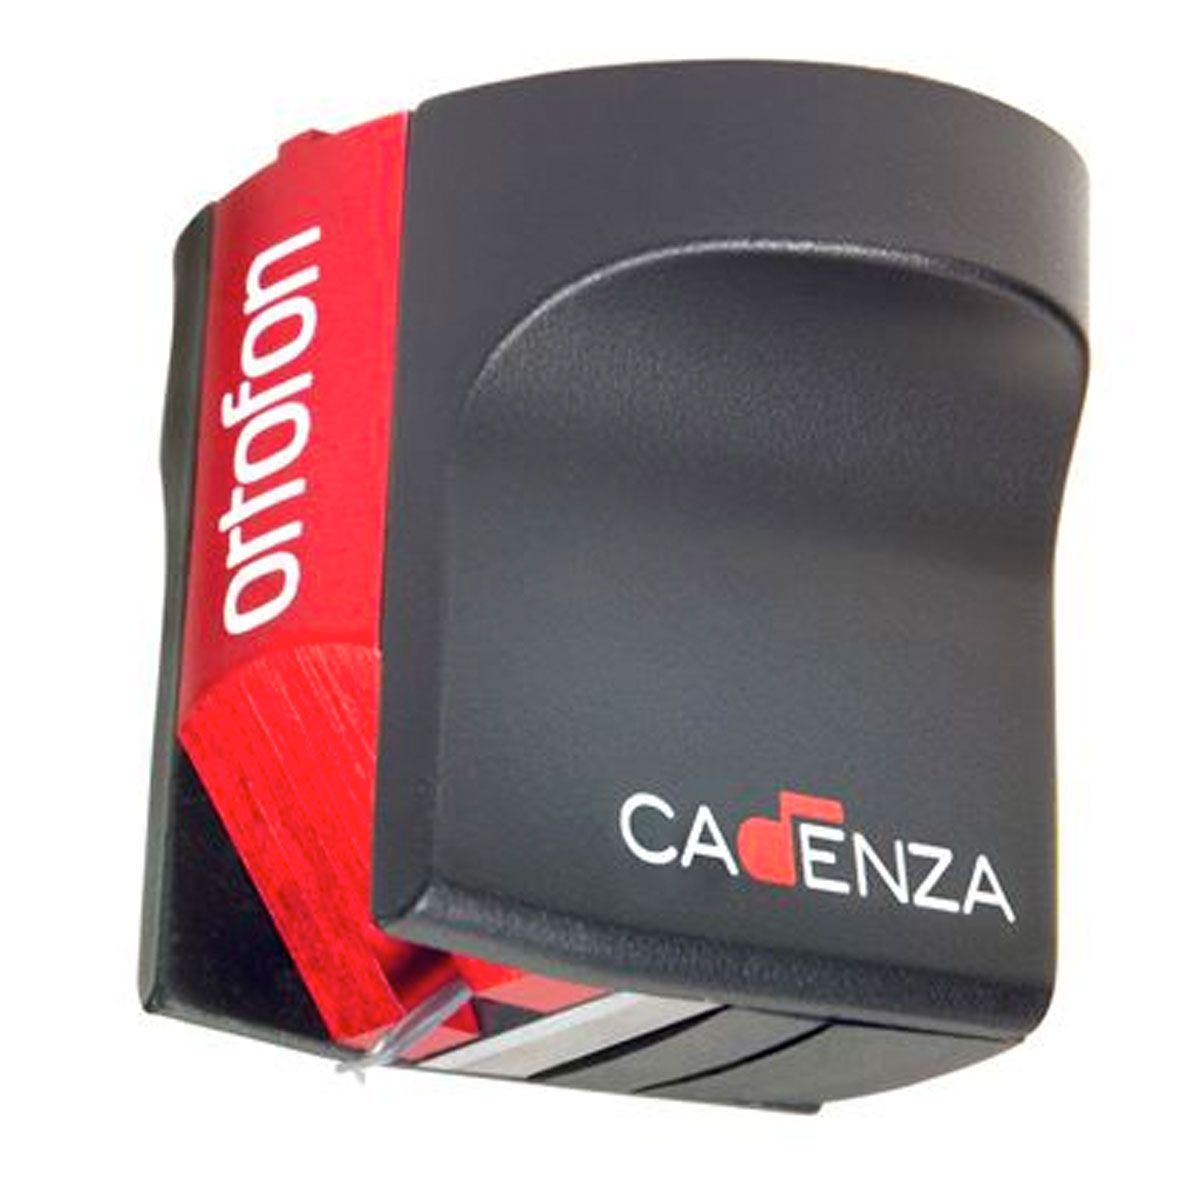 Ortofon MC Cadenza Red Turntable Cartridge